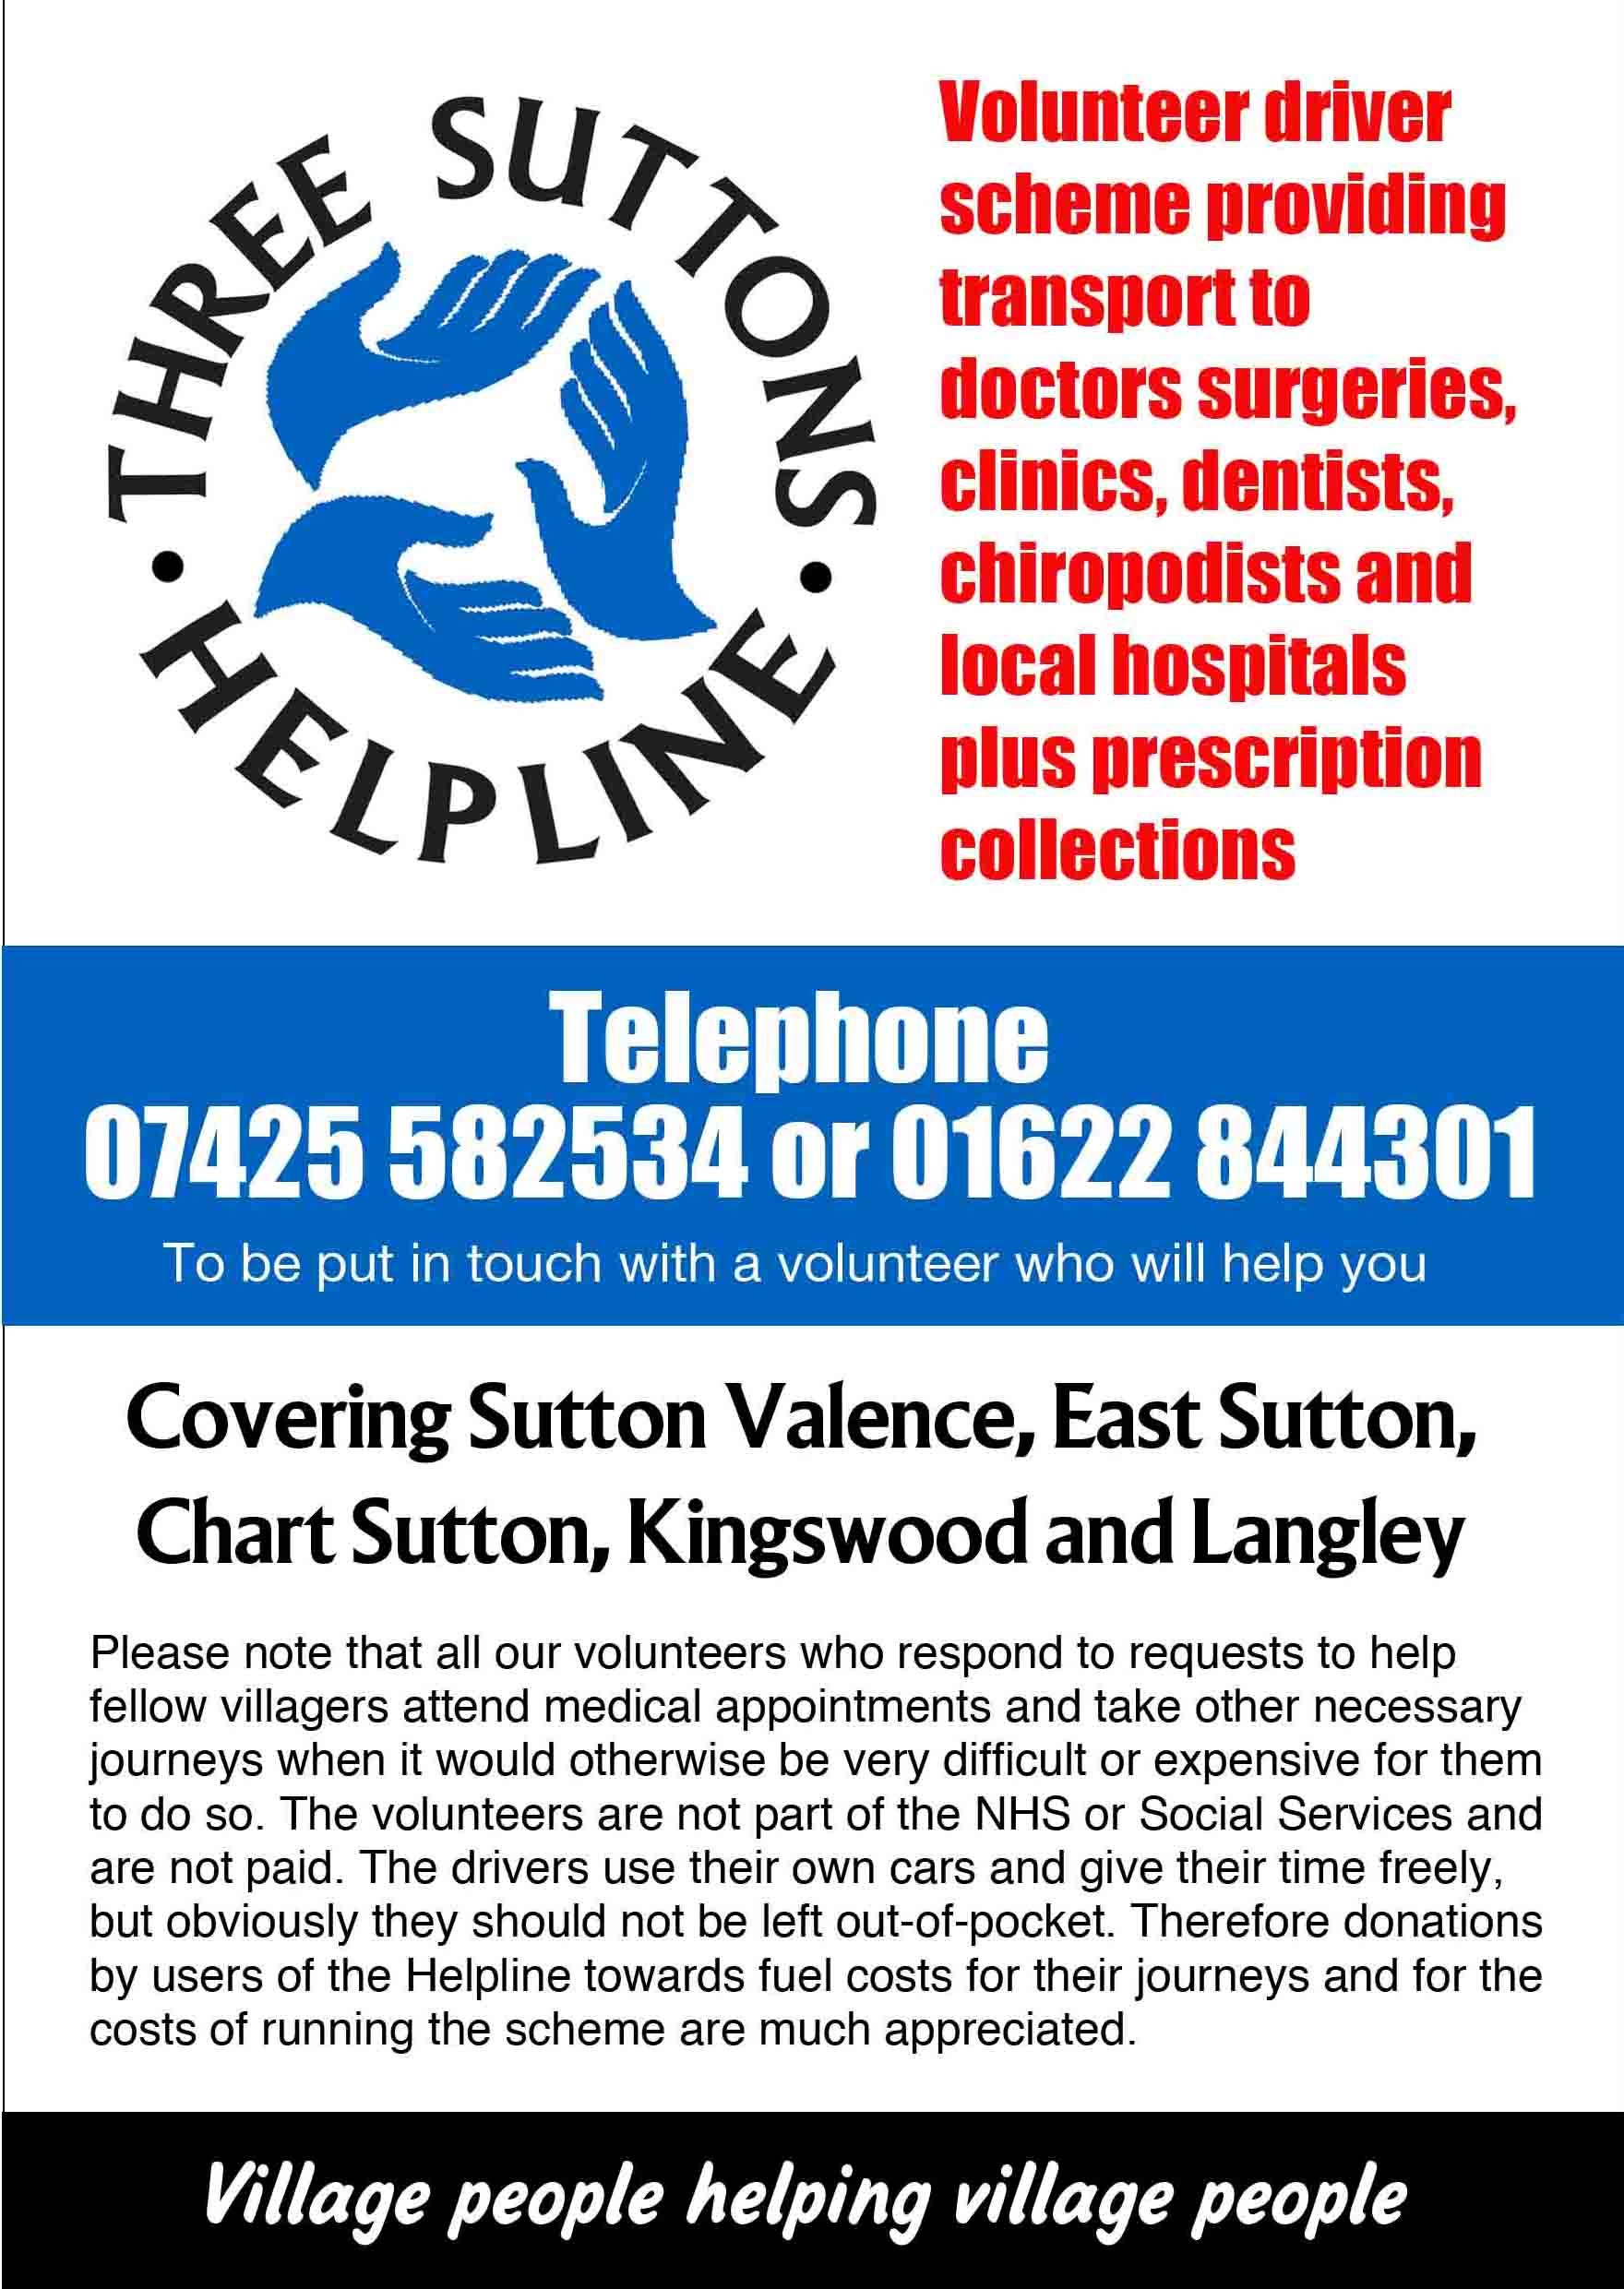 Broomfield & Kingswood Parish Council Three Suttons Helpline